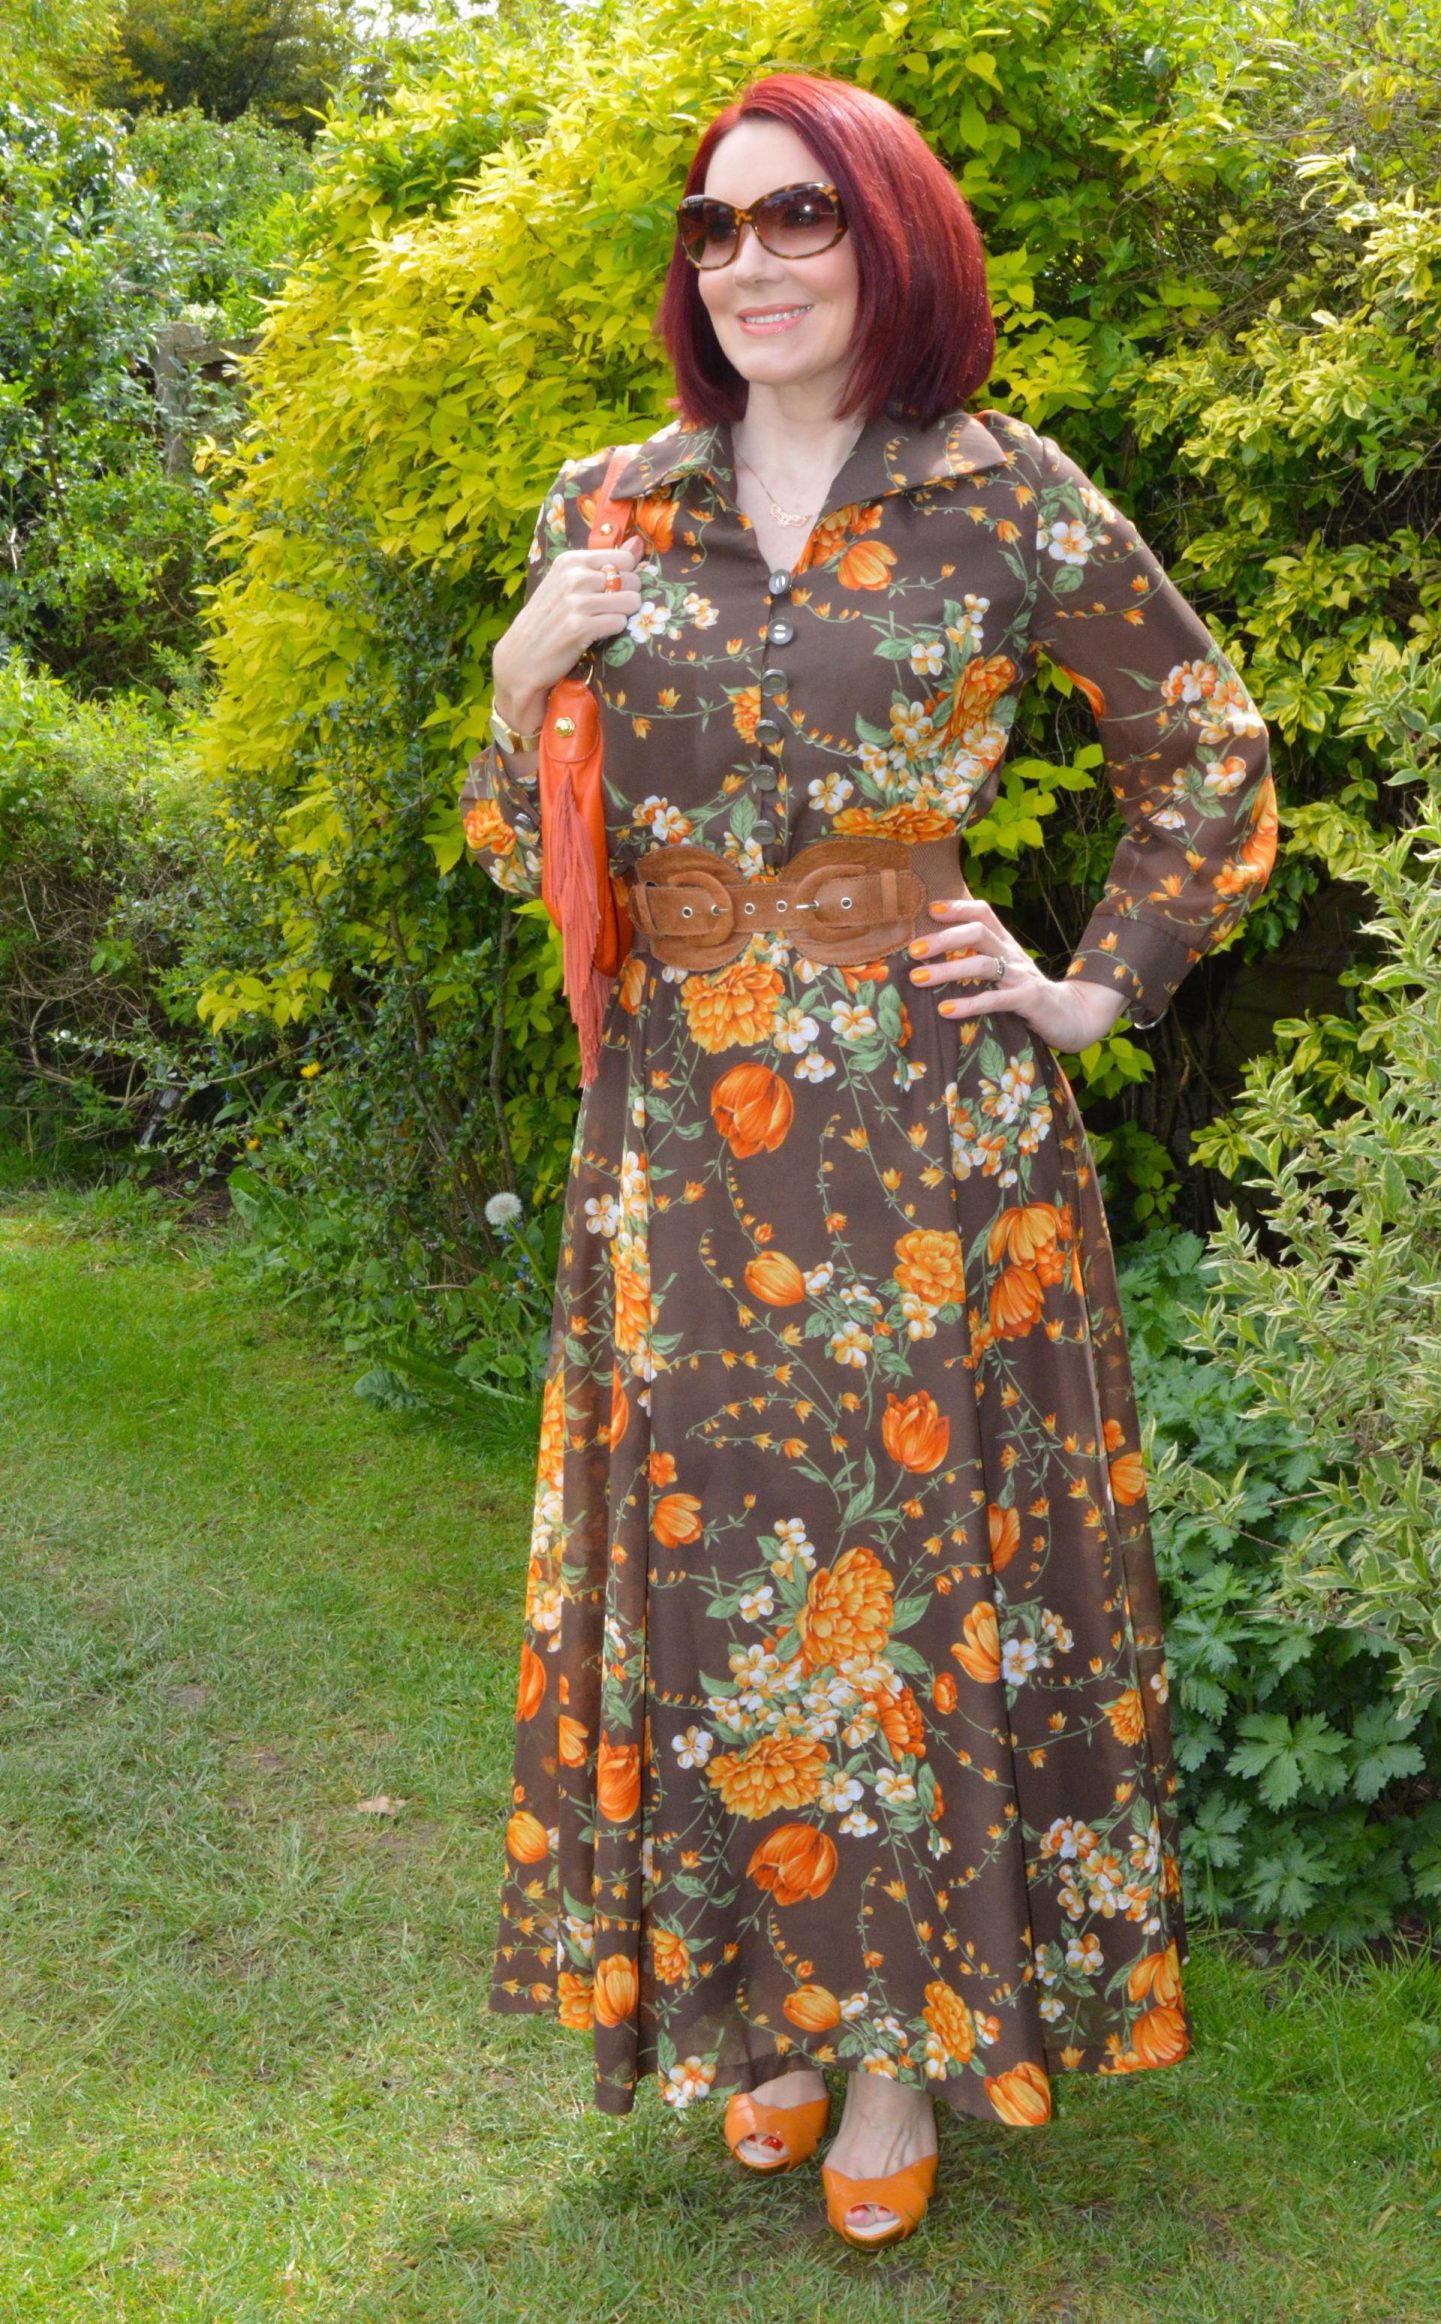 Wearing Pre-loved Floral Prints - May's Thrifty Six, vintage brown and orange floral print maxi dress, Modalu orange fringed bag